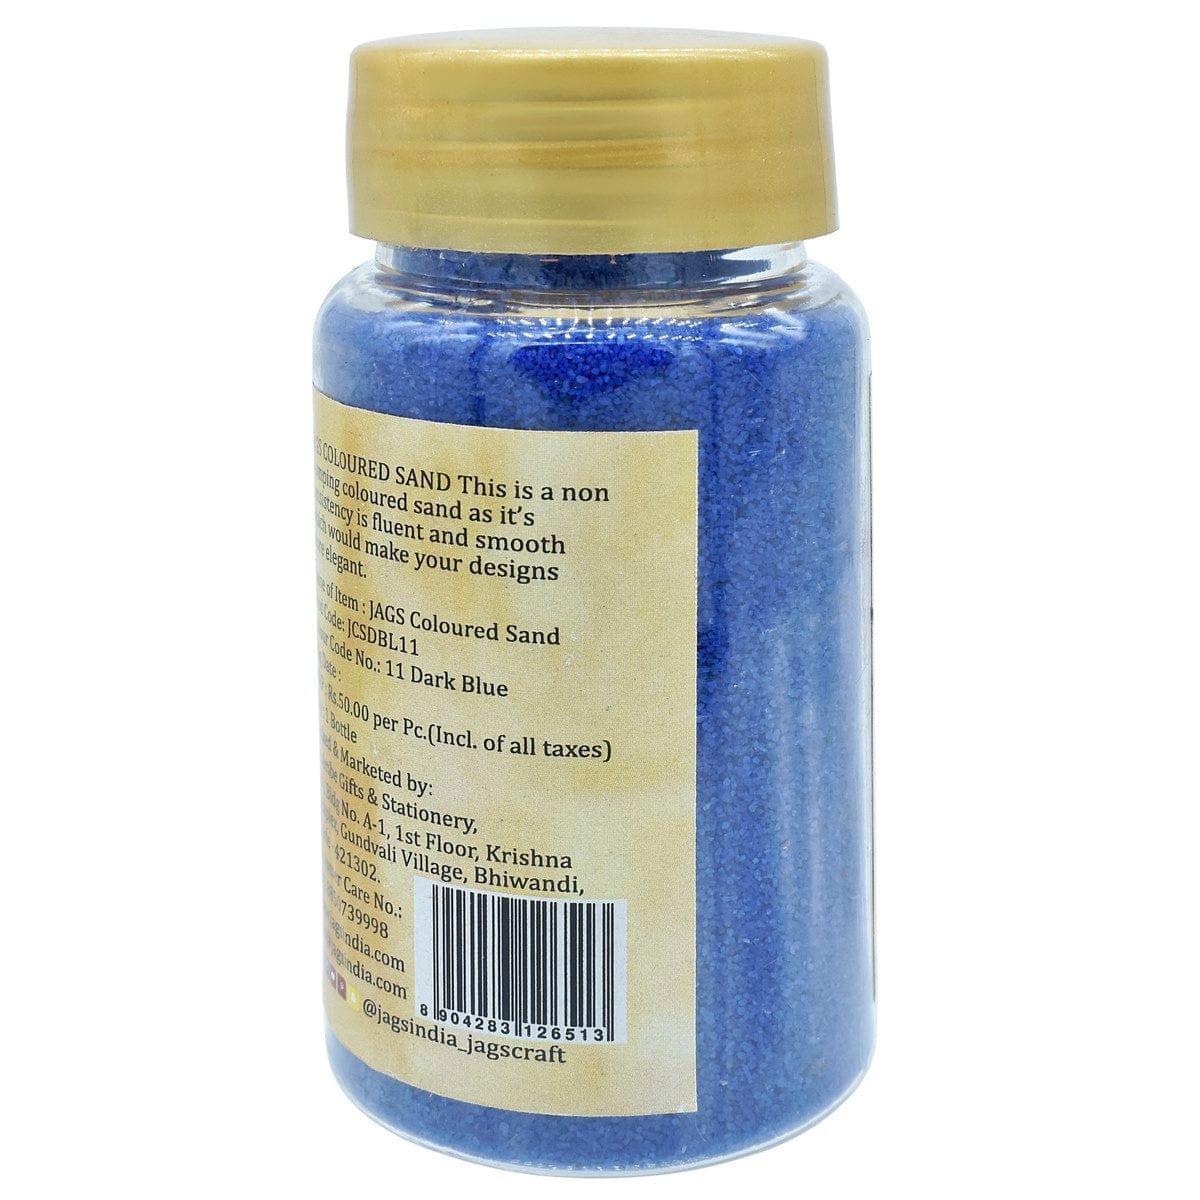 jags-mumbai Sand Jags Coloured Sand 160Gms Dark Blue No 11 - Vibrant Craft Sand for Artistic Creations